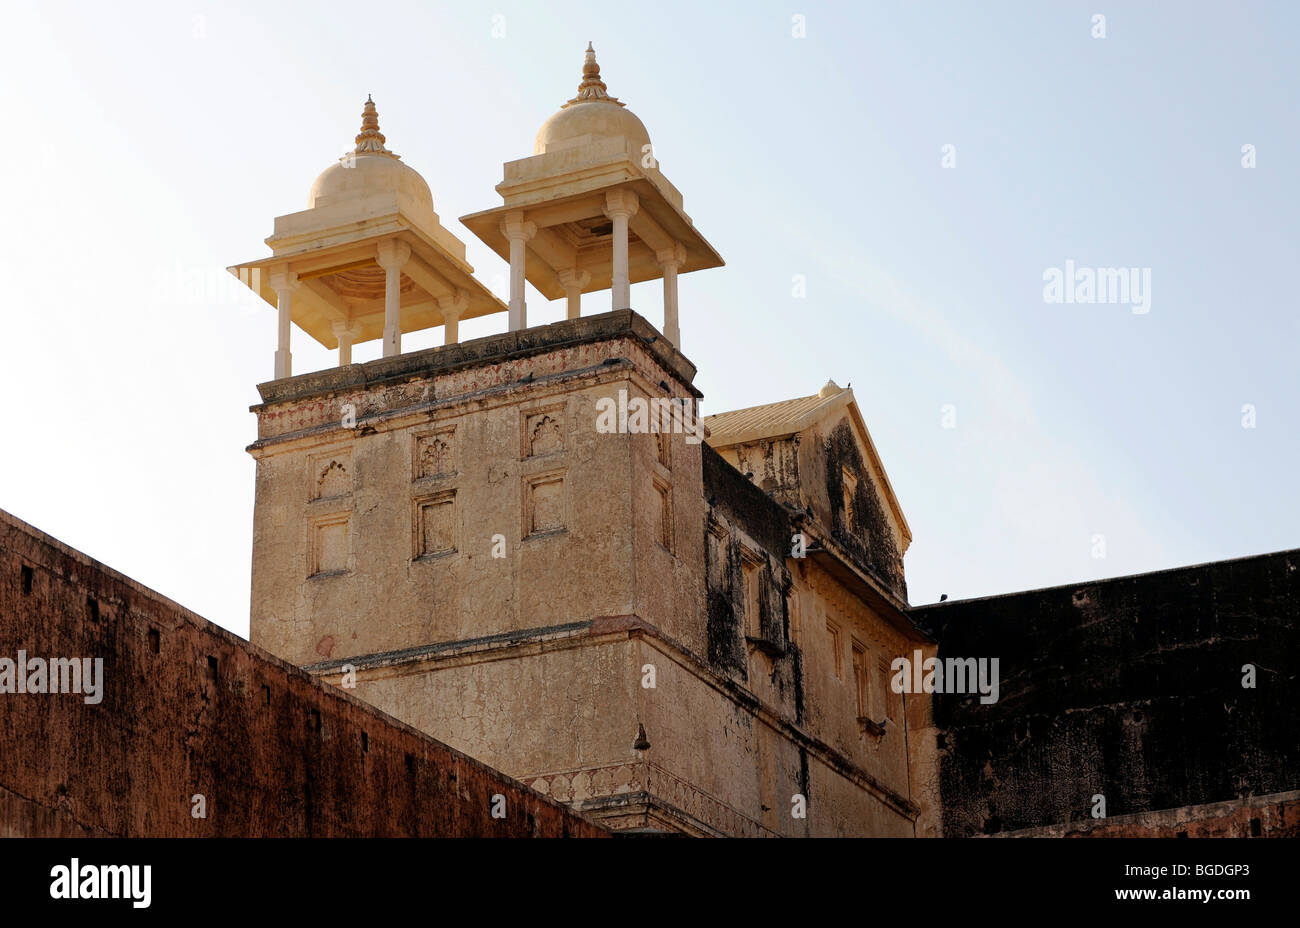 Amber Palace, detail, Amber, near Jaipur, Rajasthan, North India, India, South Asia, Asia Stock Photo